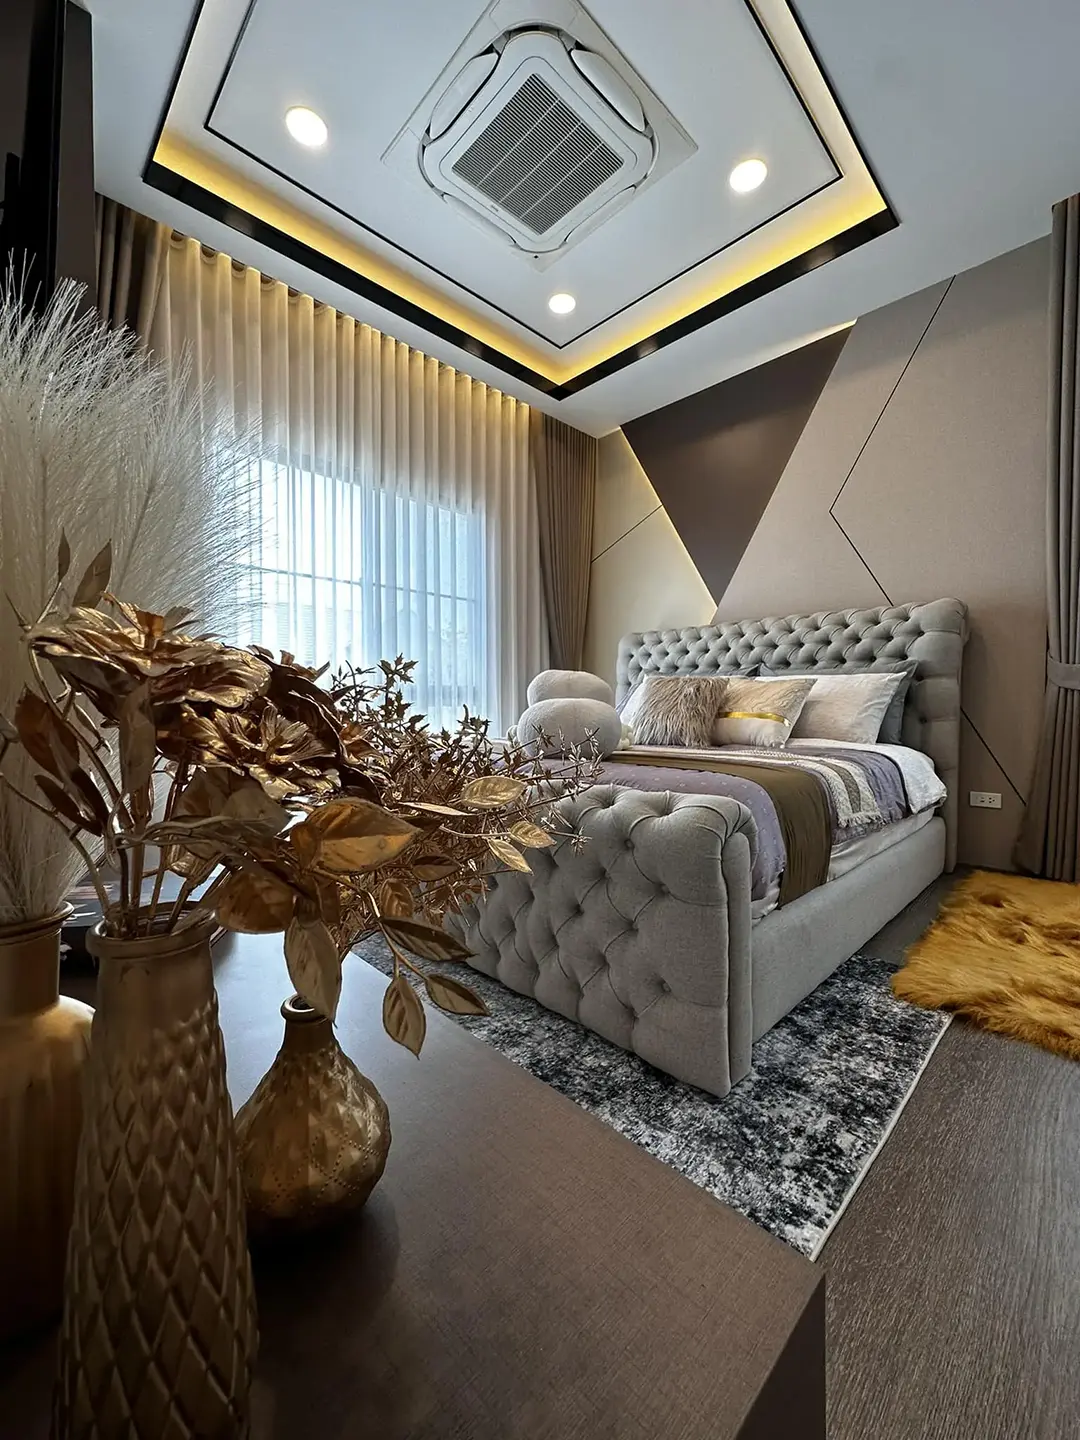 Super Luxury Villa for rent or for sale Nantawan Rama 9 - Krungthep Kreetha -Sawasdee Bangkok Property-Luxury-Homes